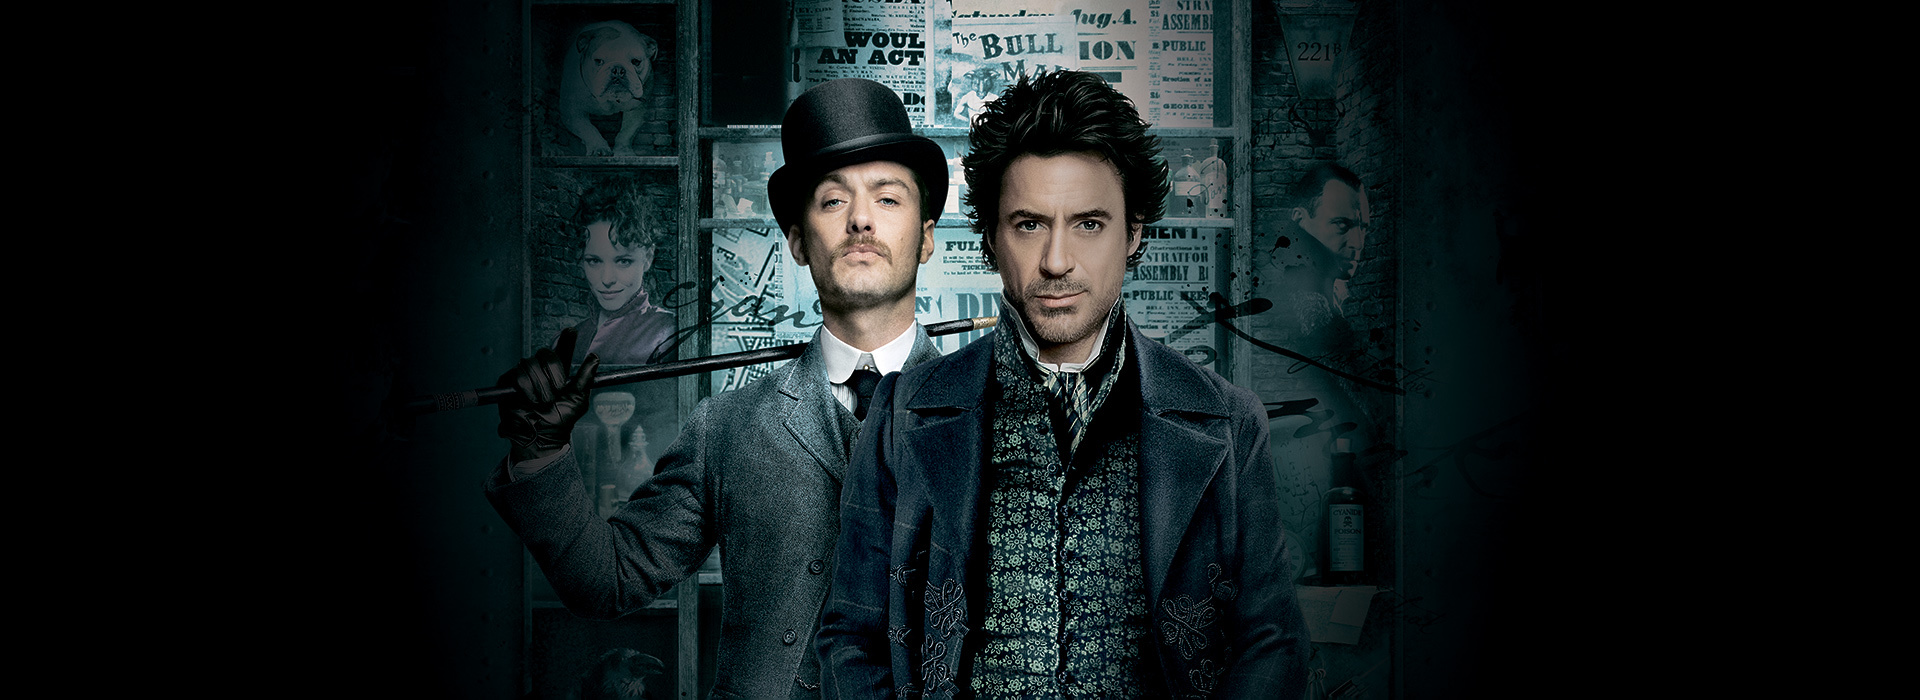 Movie poster Sherlock Holmes